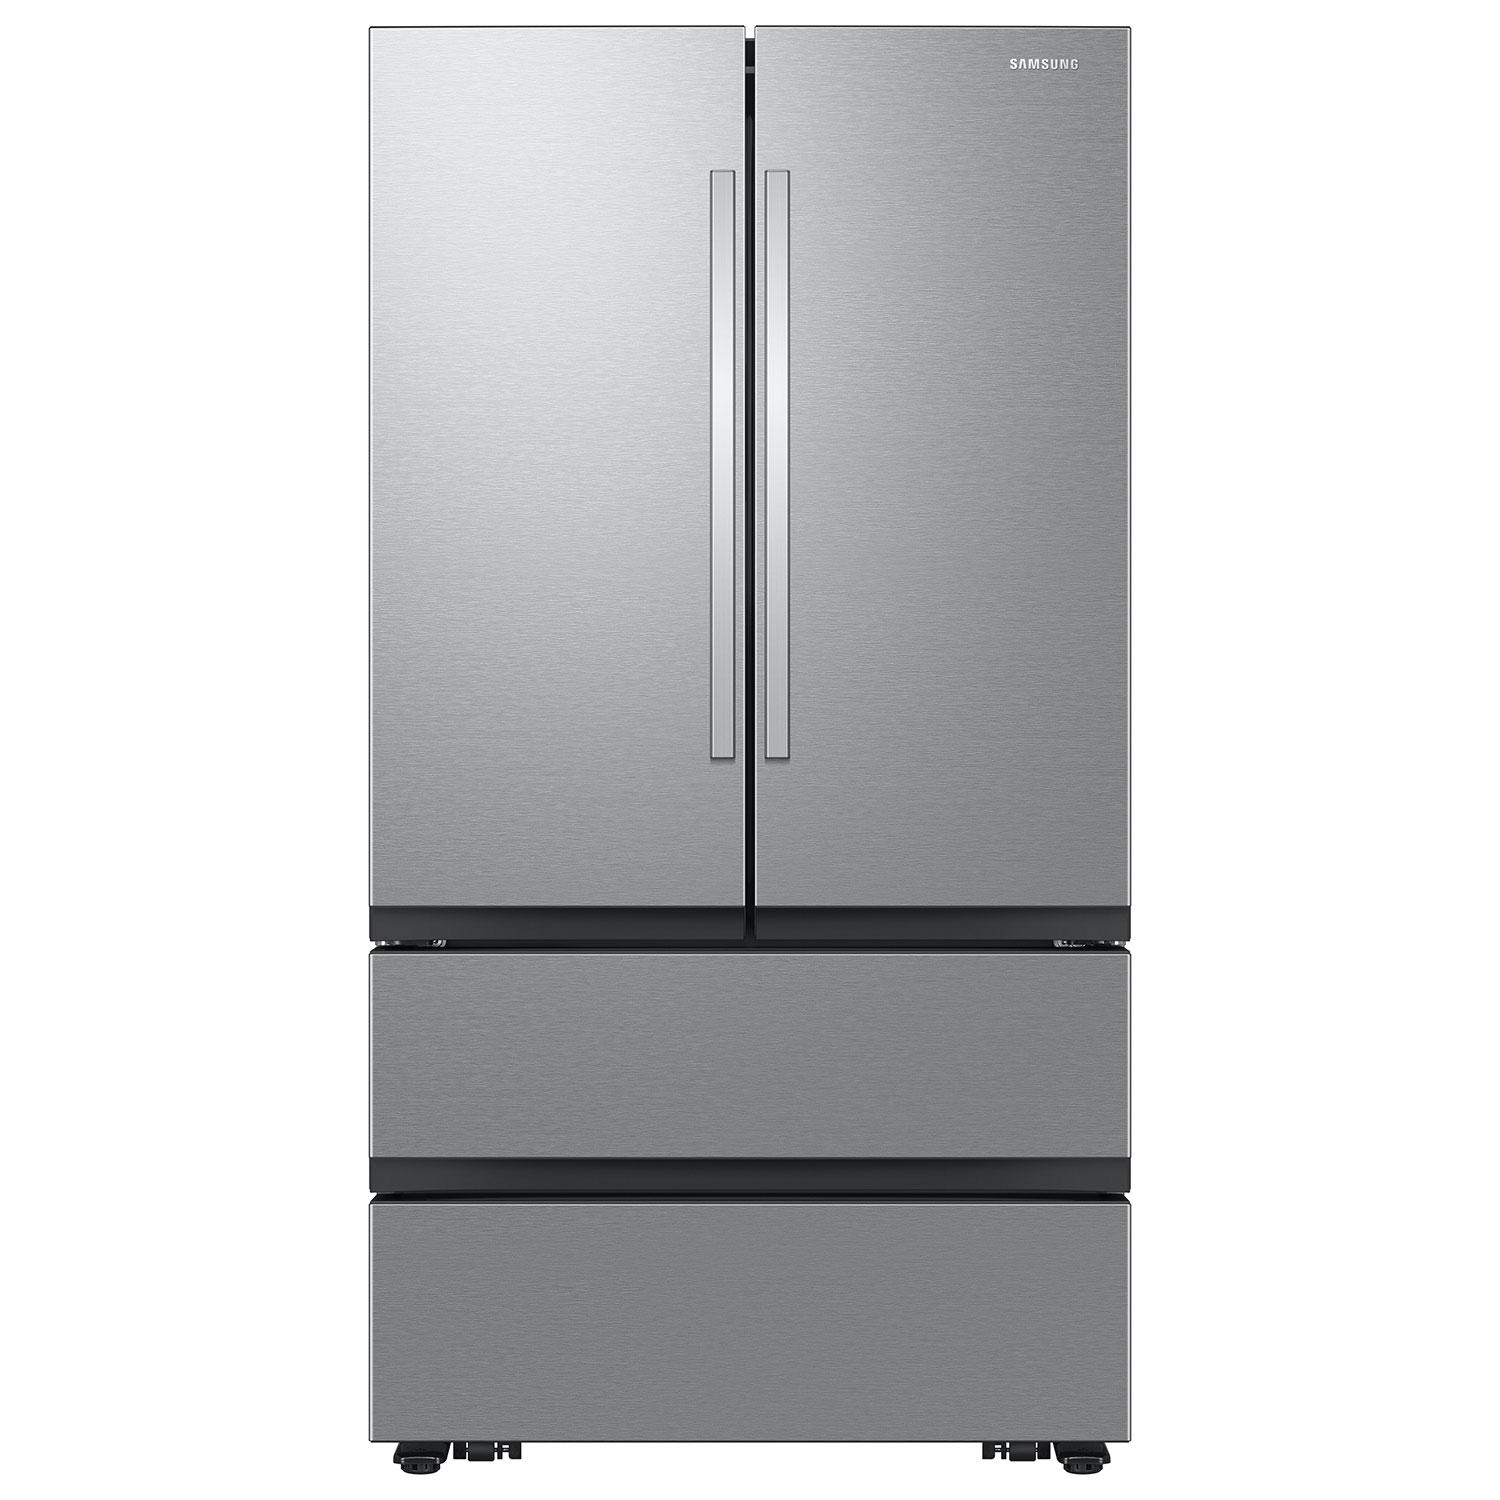 Samsung 31 Cu. Ft. Mega Capacity French Door Refrigerator w/ Dual Auto Ice Maker